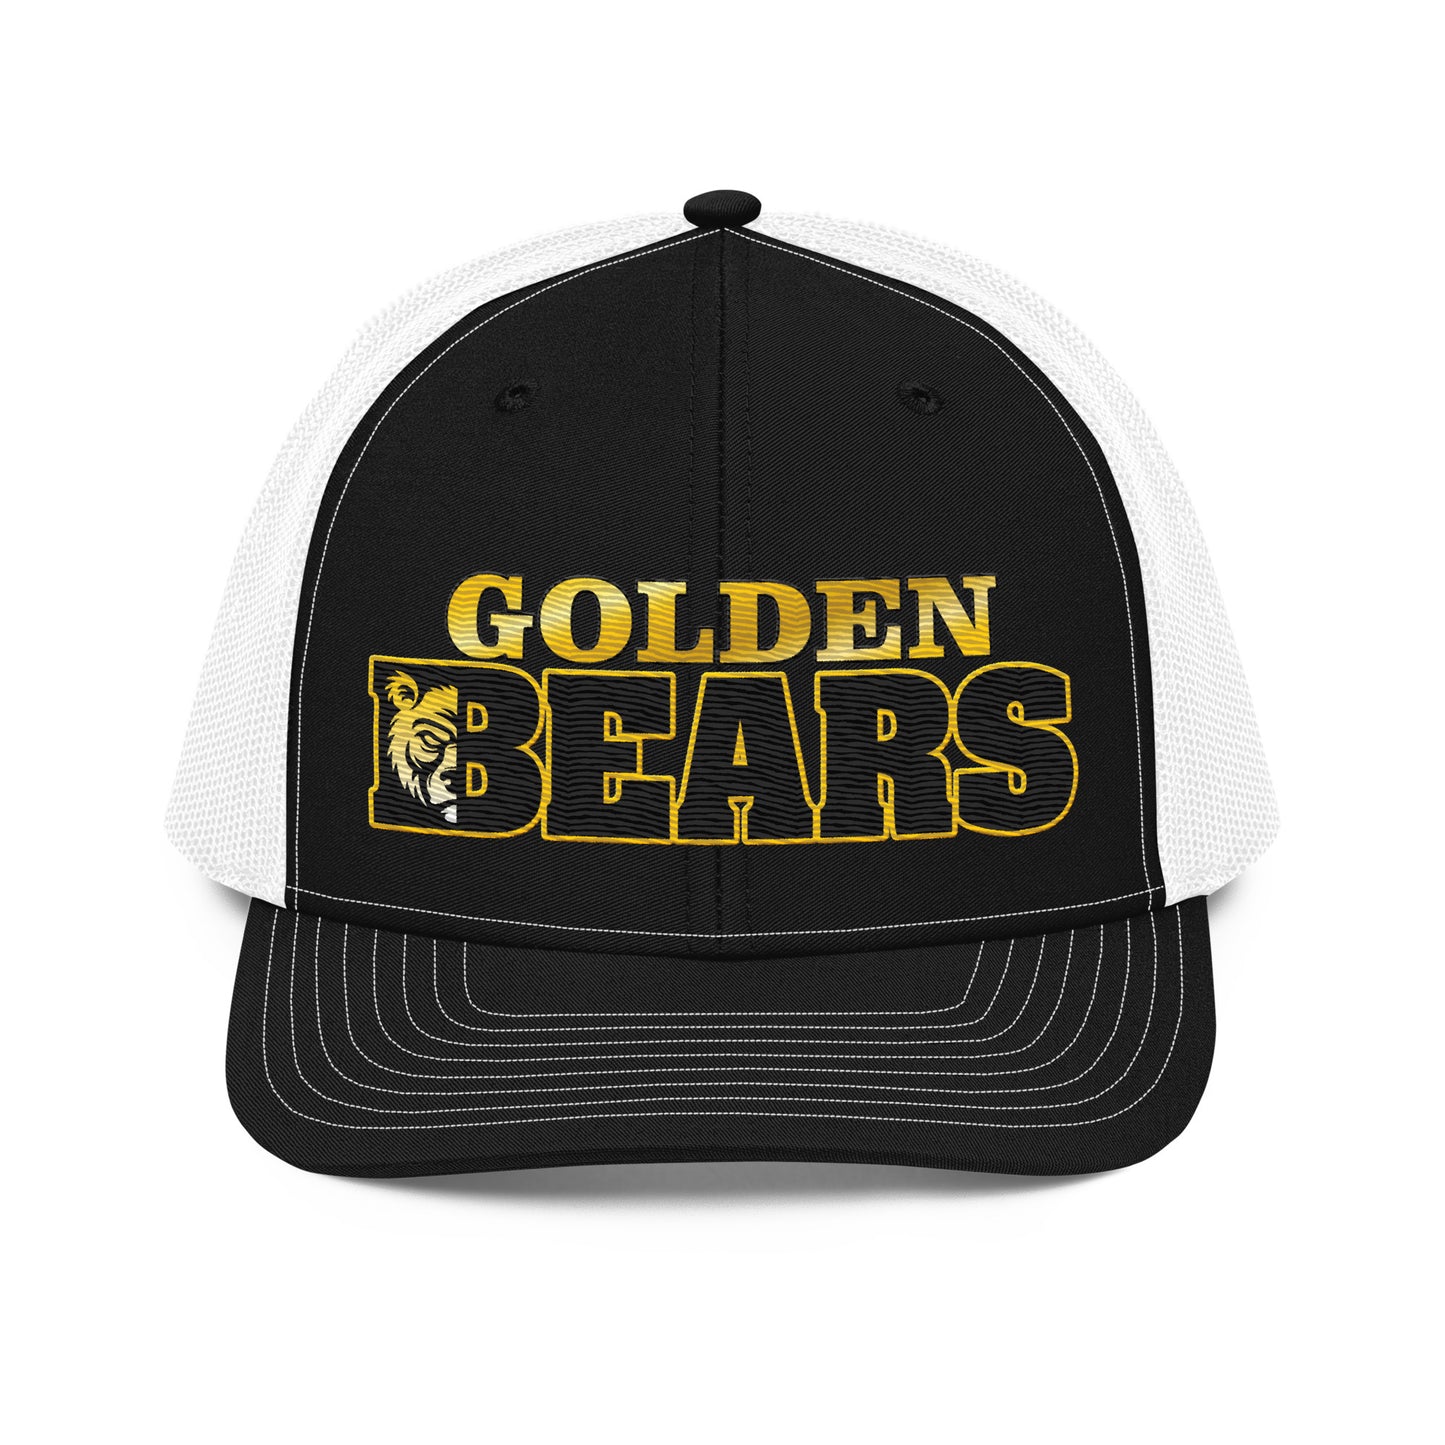 BWHS Snapback Trucker Cap - Golden Bears